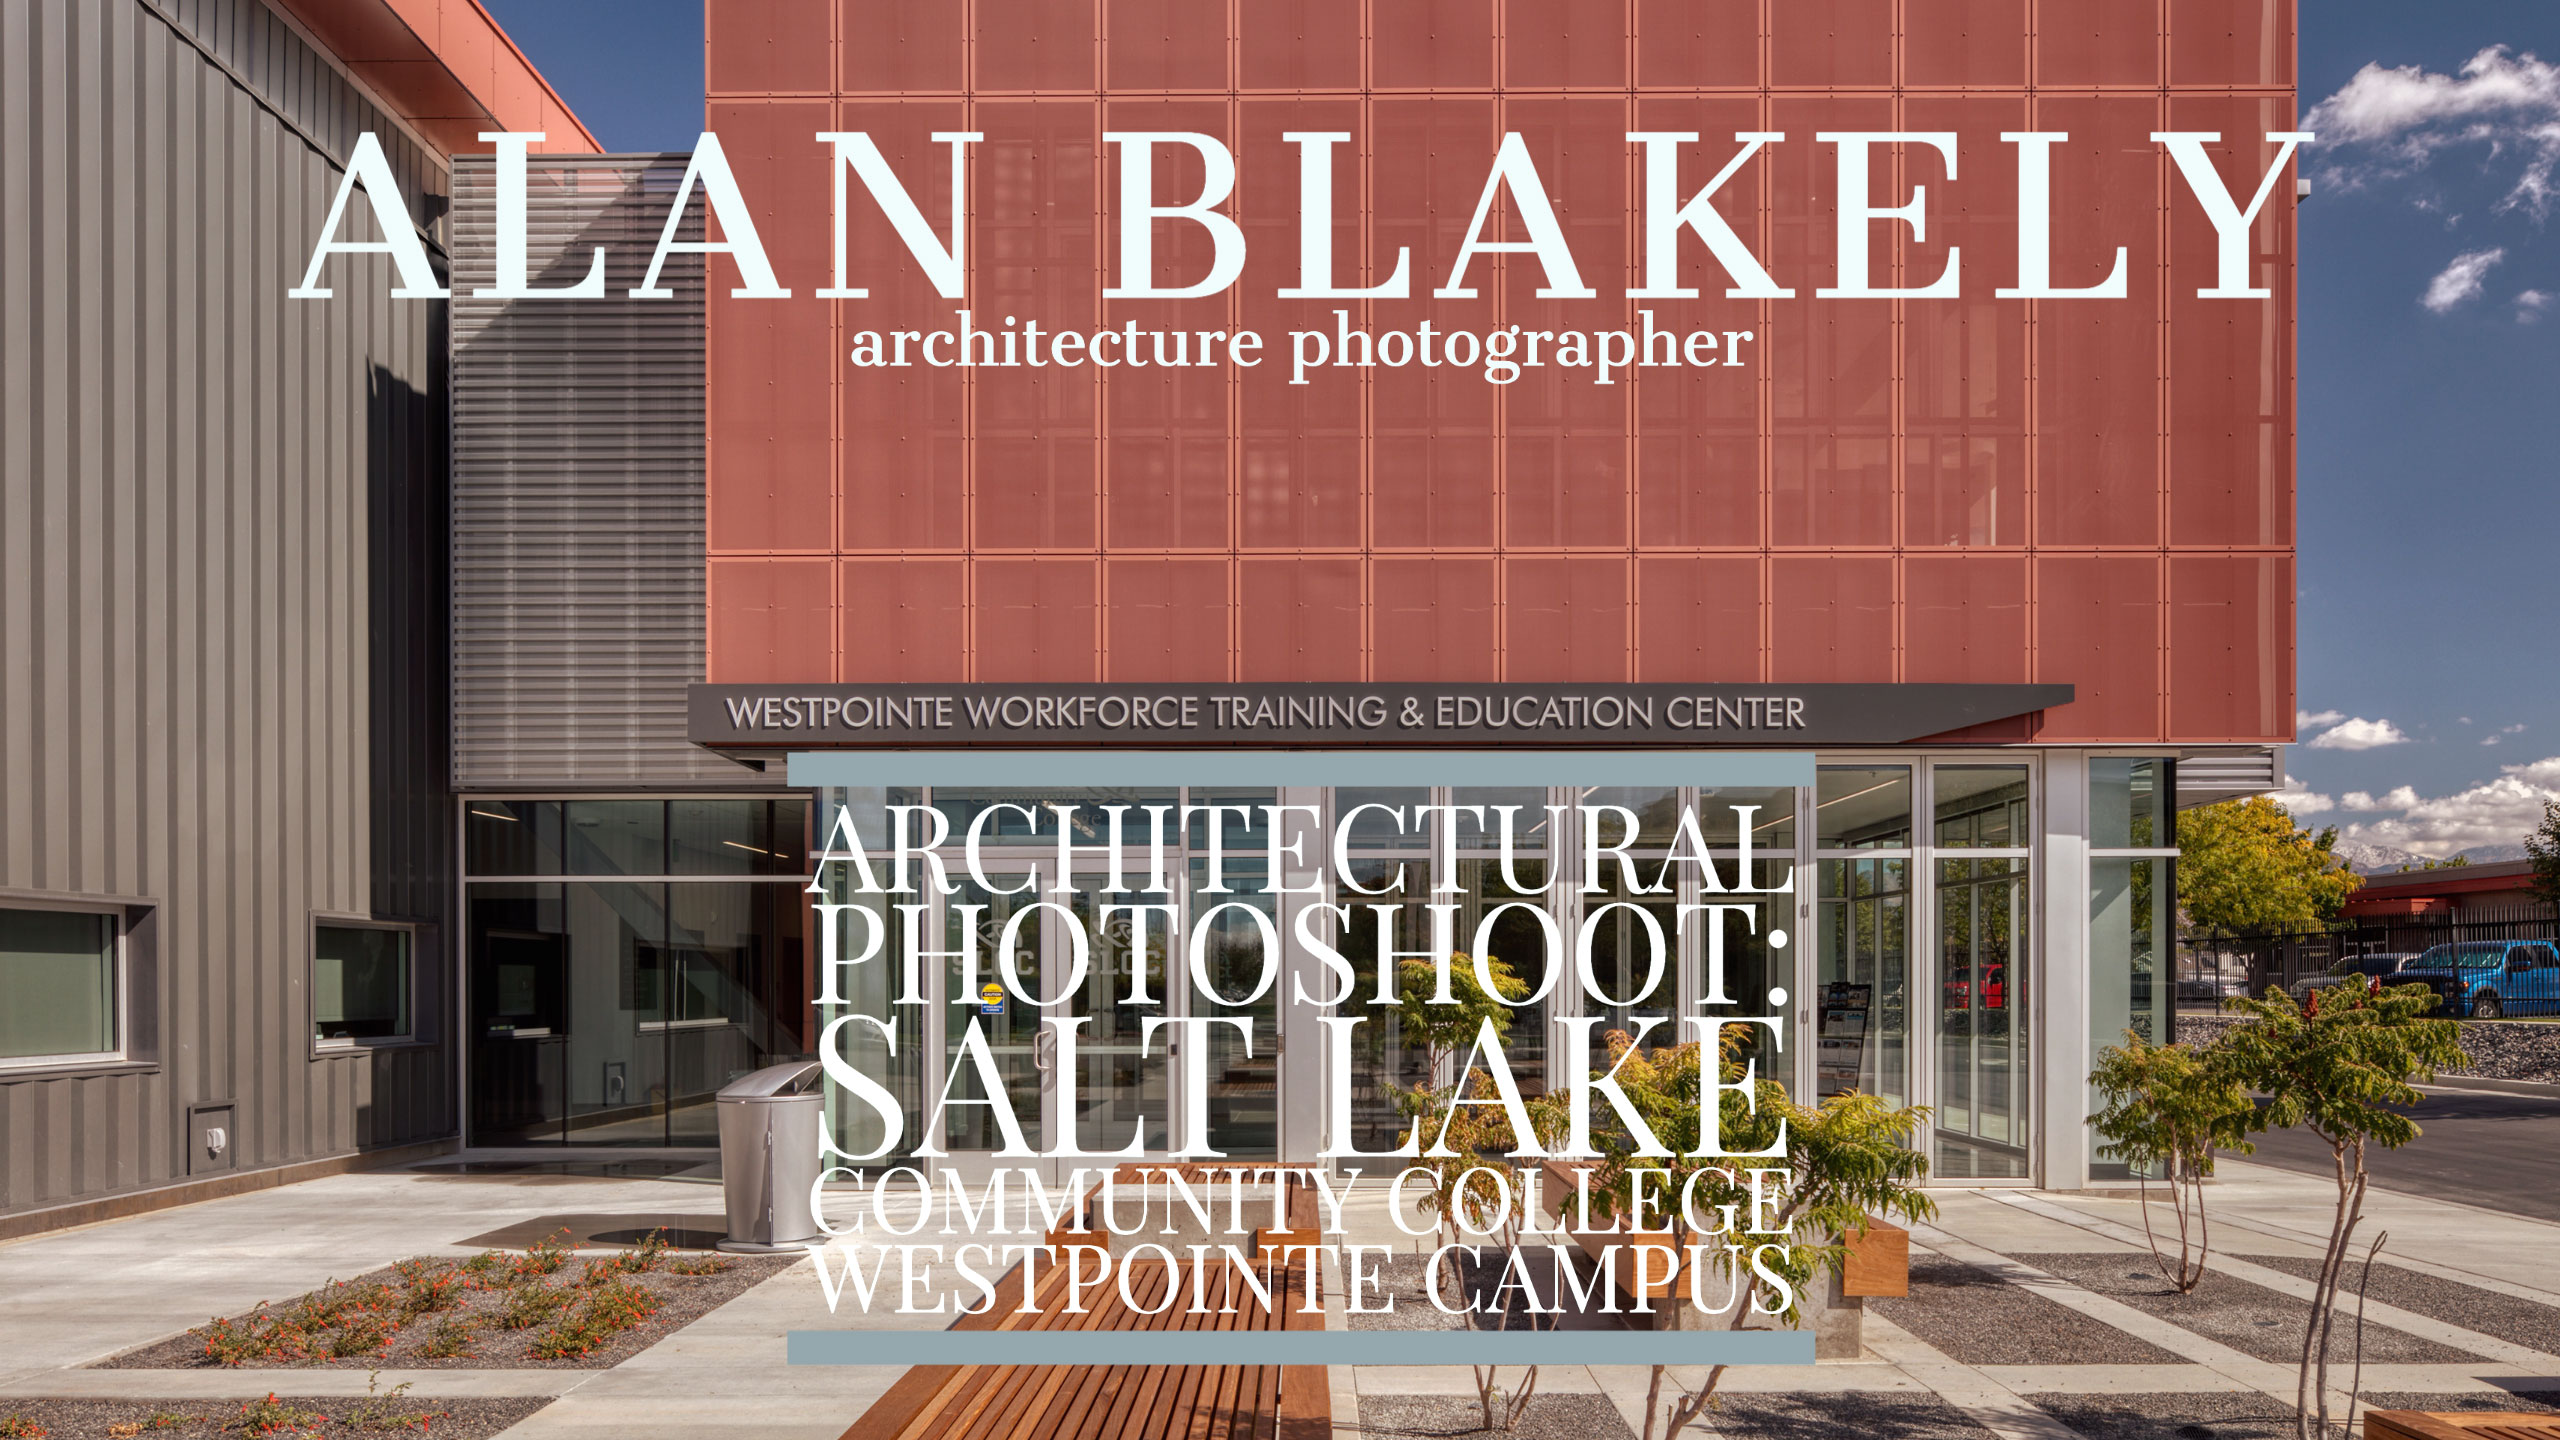 Photoshoot: Salt Lake Community College Westpointe